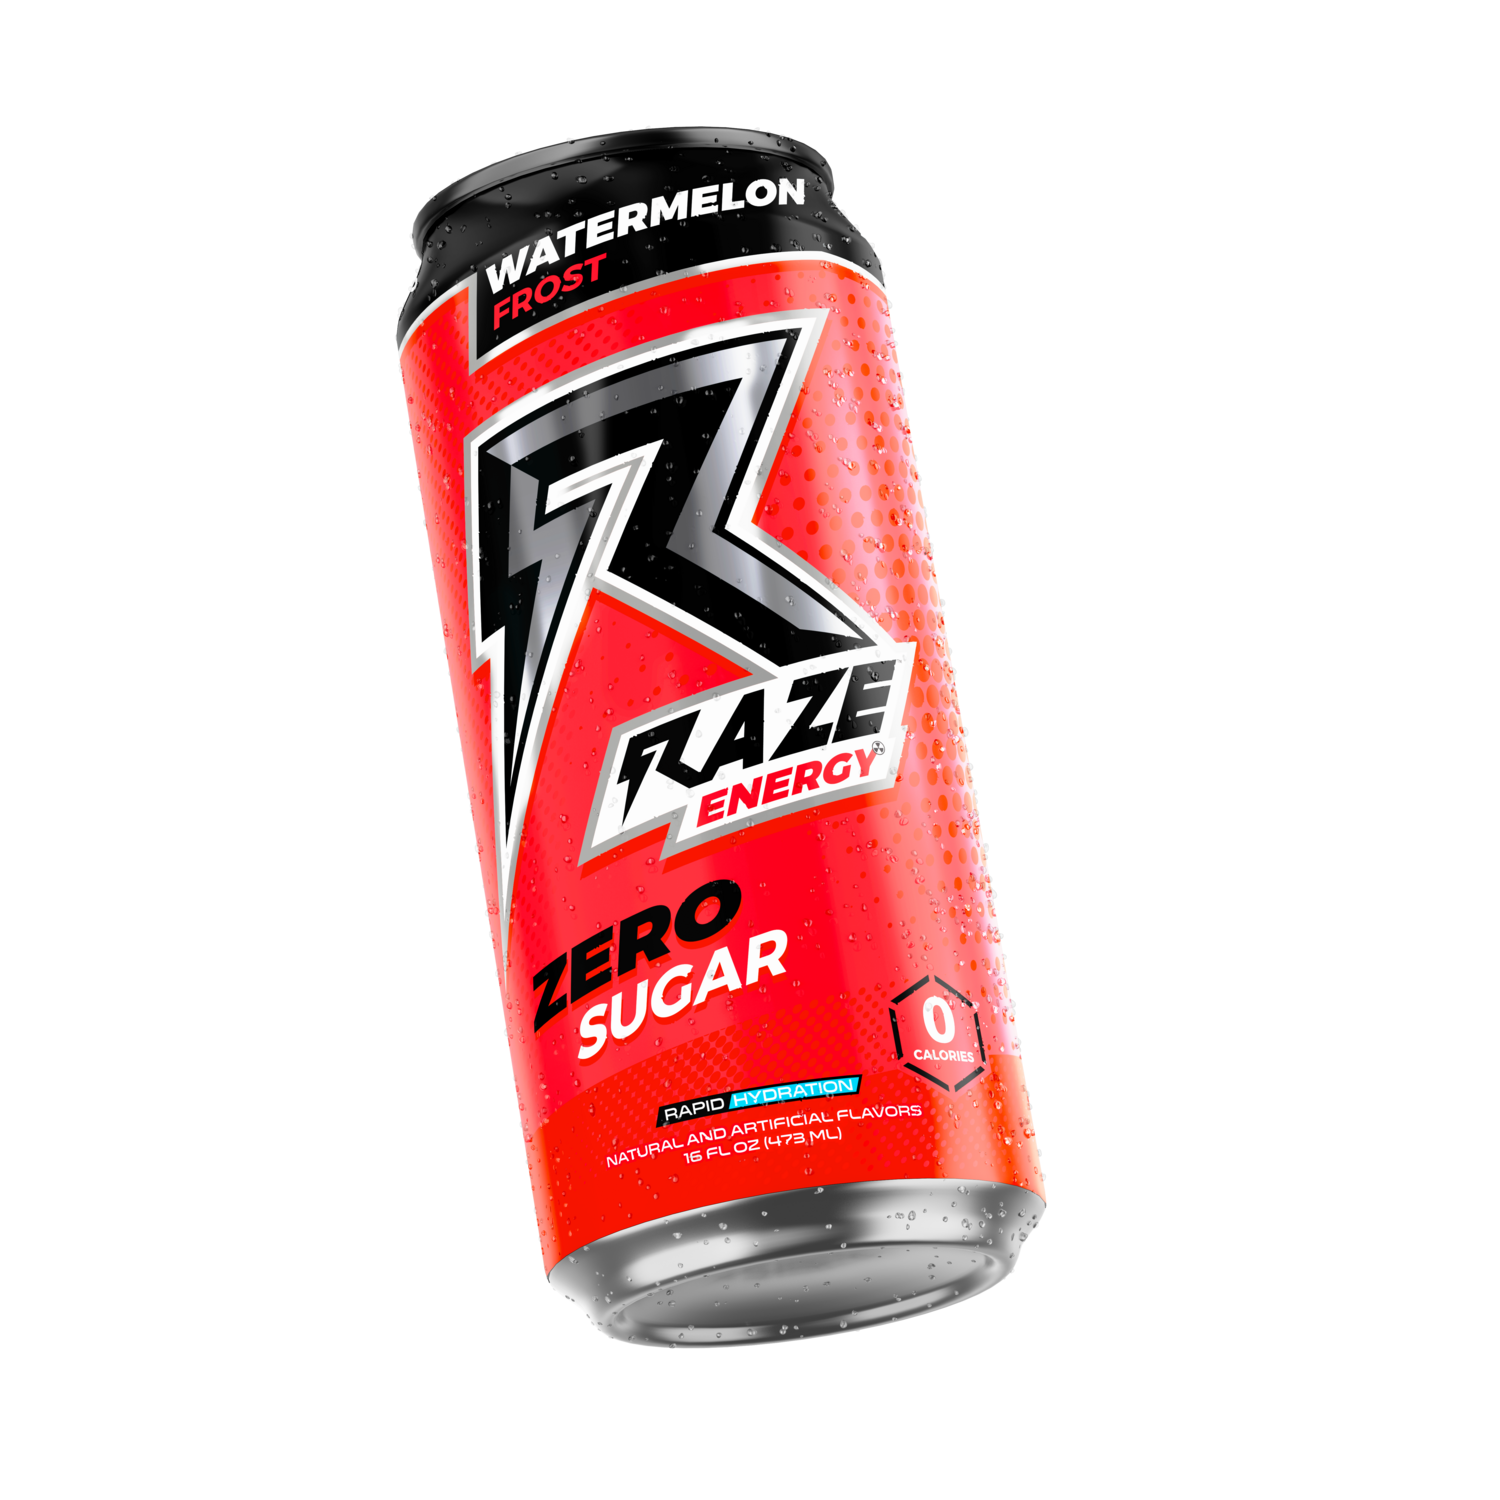 Raze Energy - Watermelon Frost 16oz. (One Can)